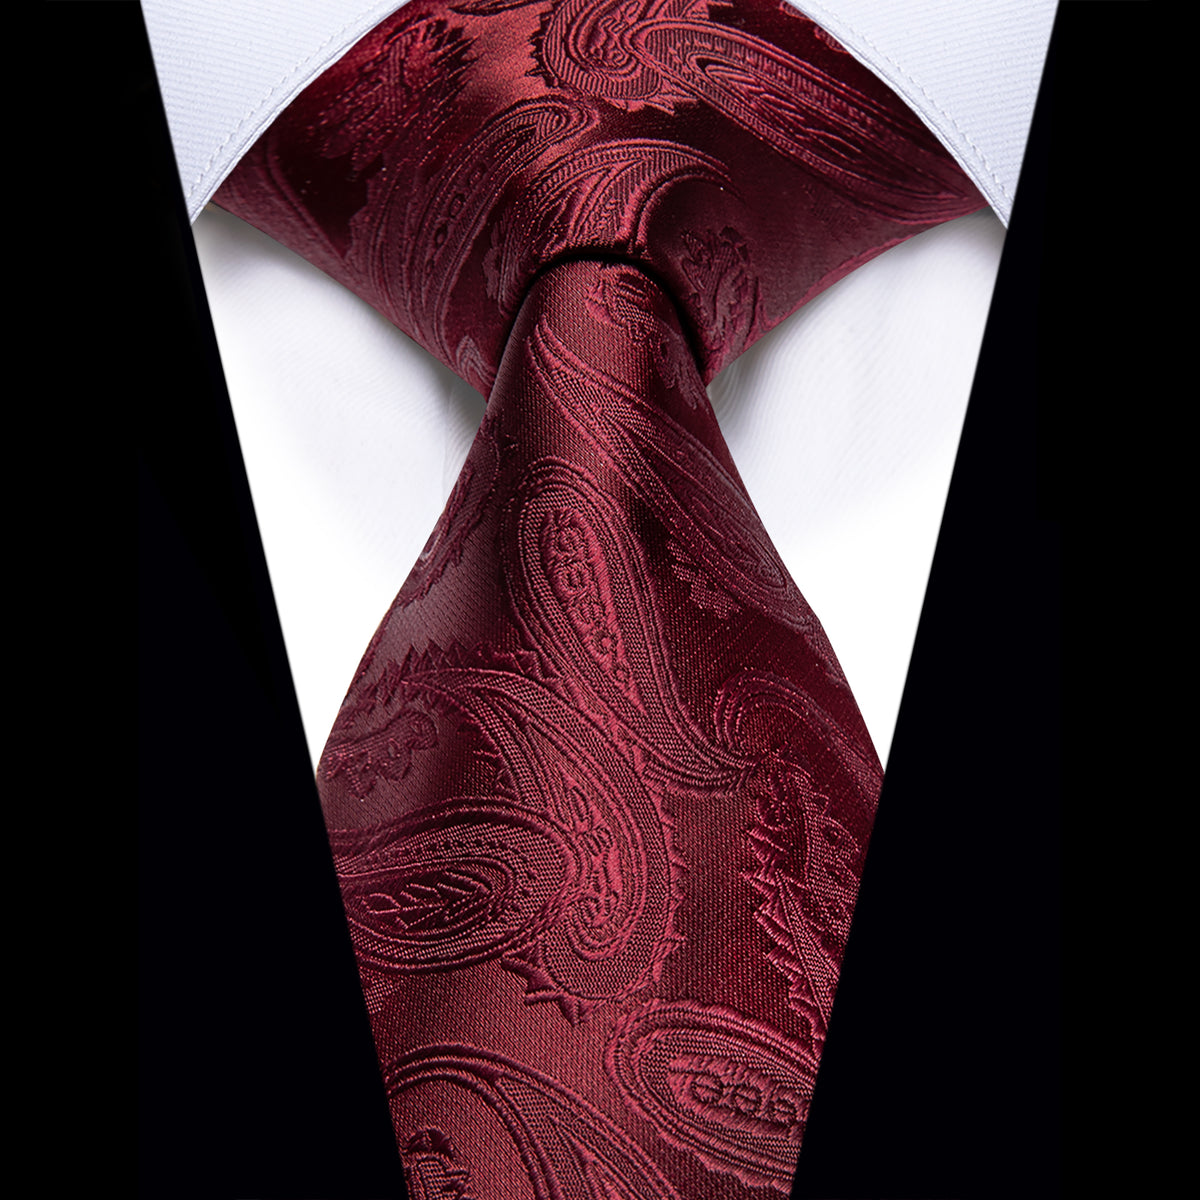 Deep Red Paisley Silk Necktie